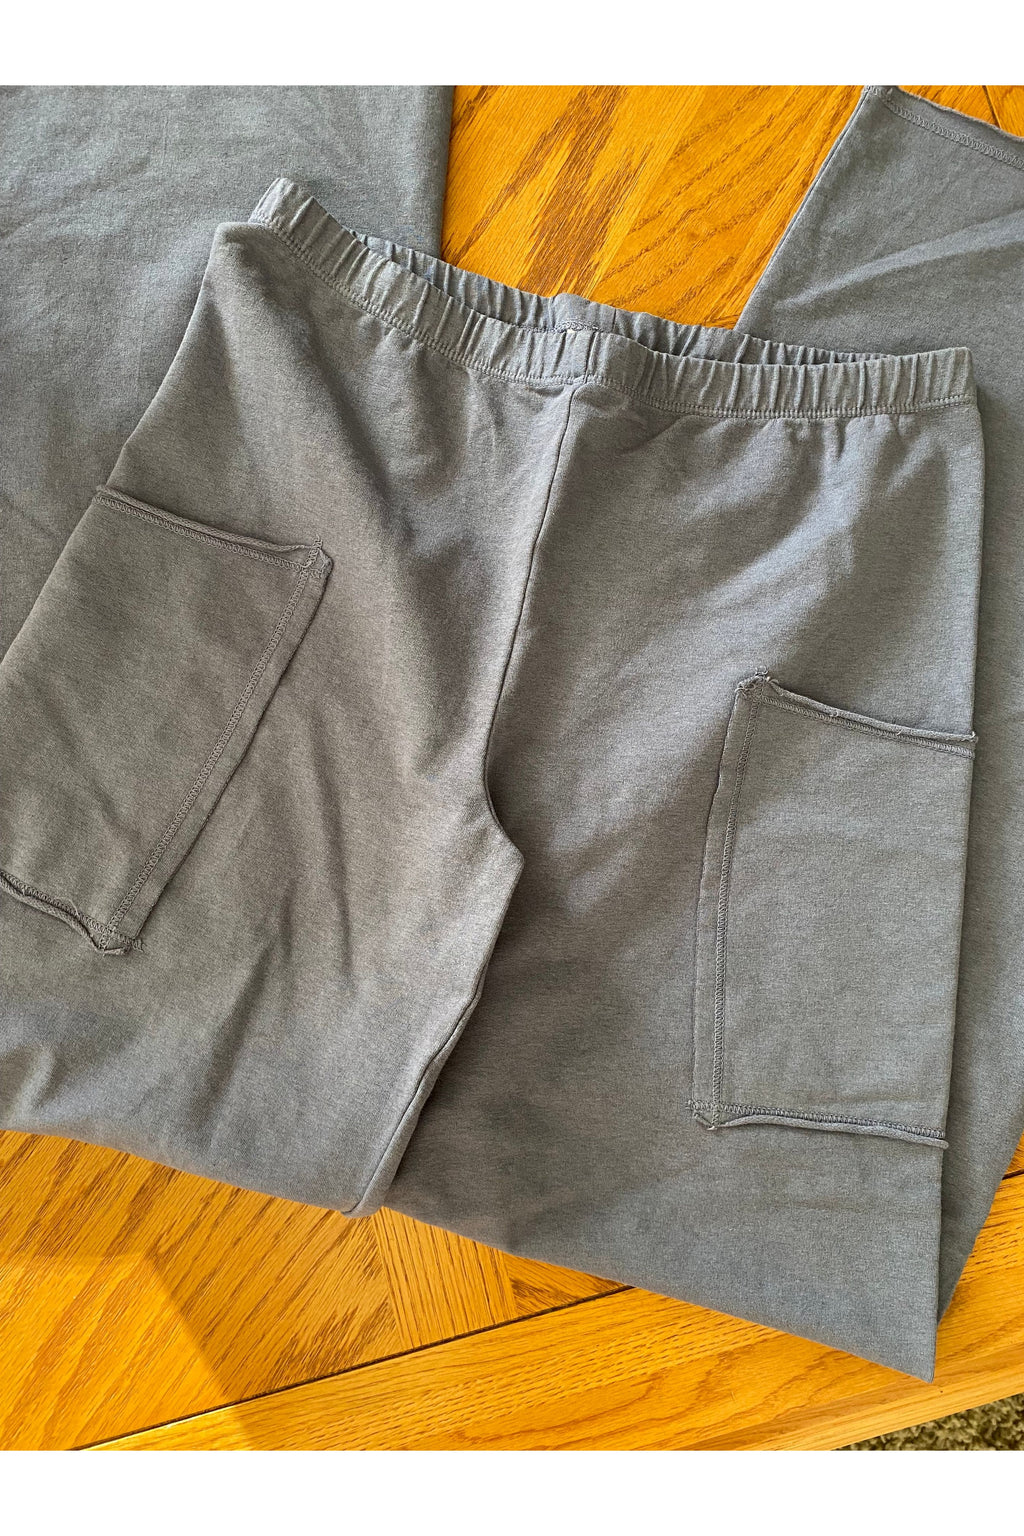 Prairie Cotton - Long Lounge Pants with Drop Pockets - HST412